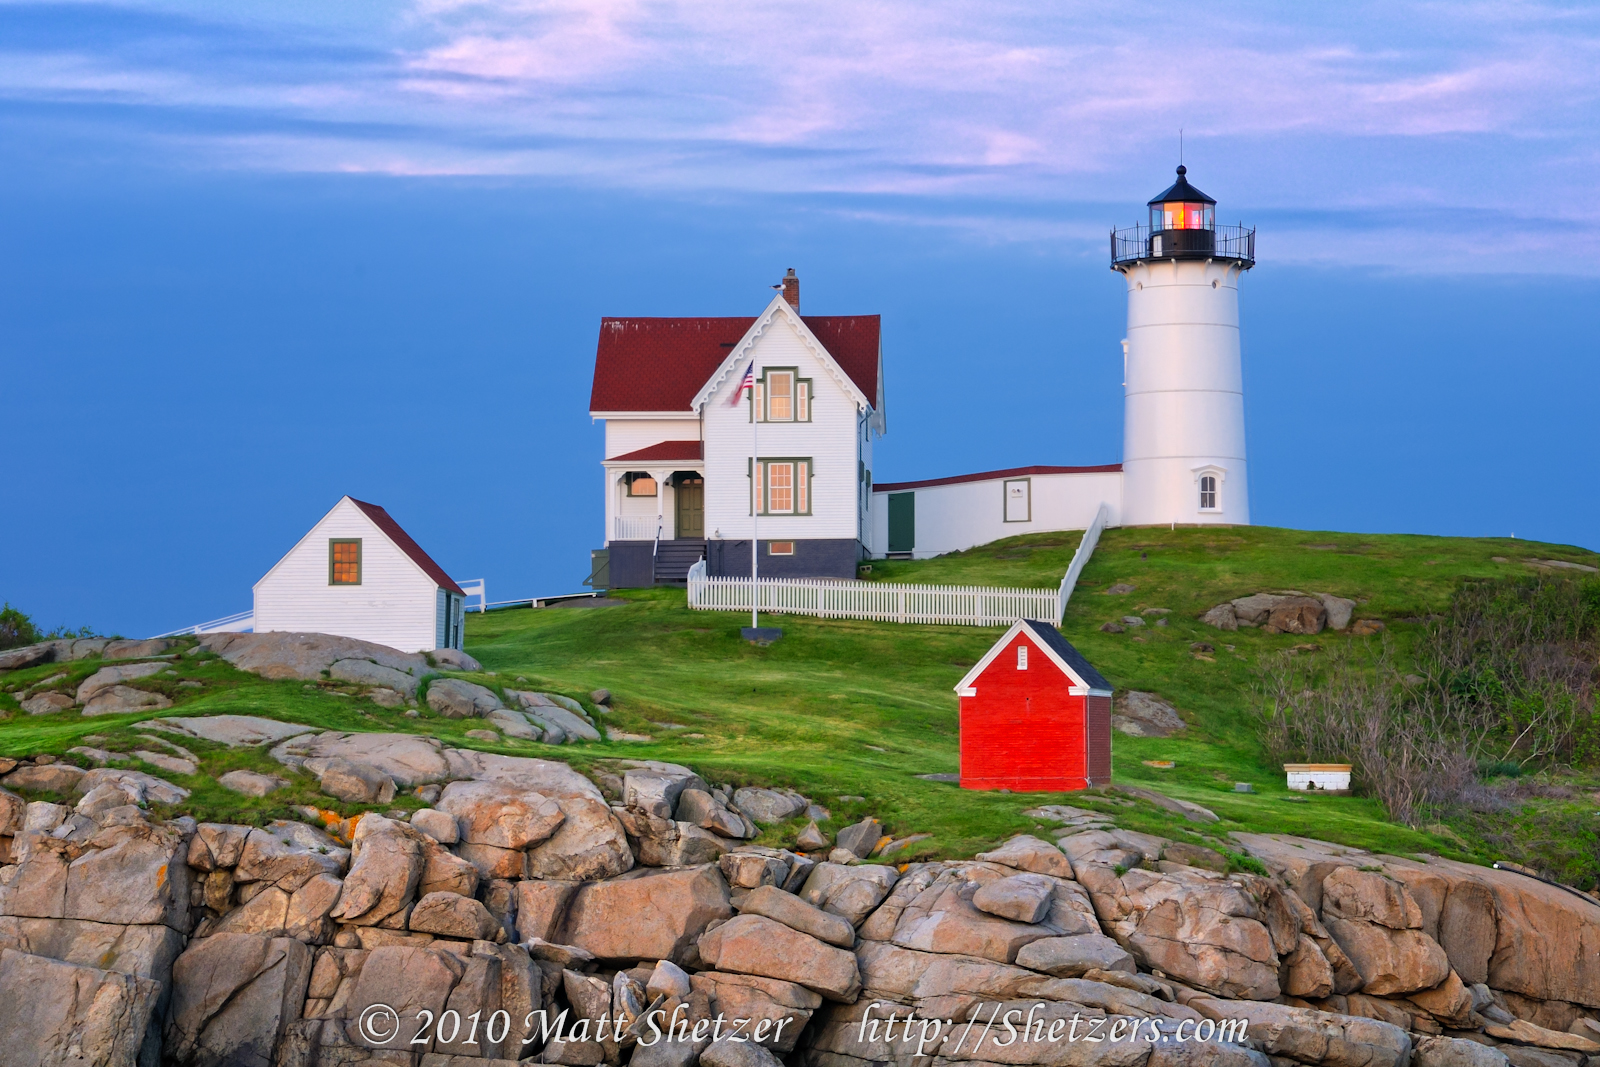 Our Travel Blog: Newfoundland Update & Lighthouse Photos